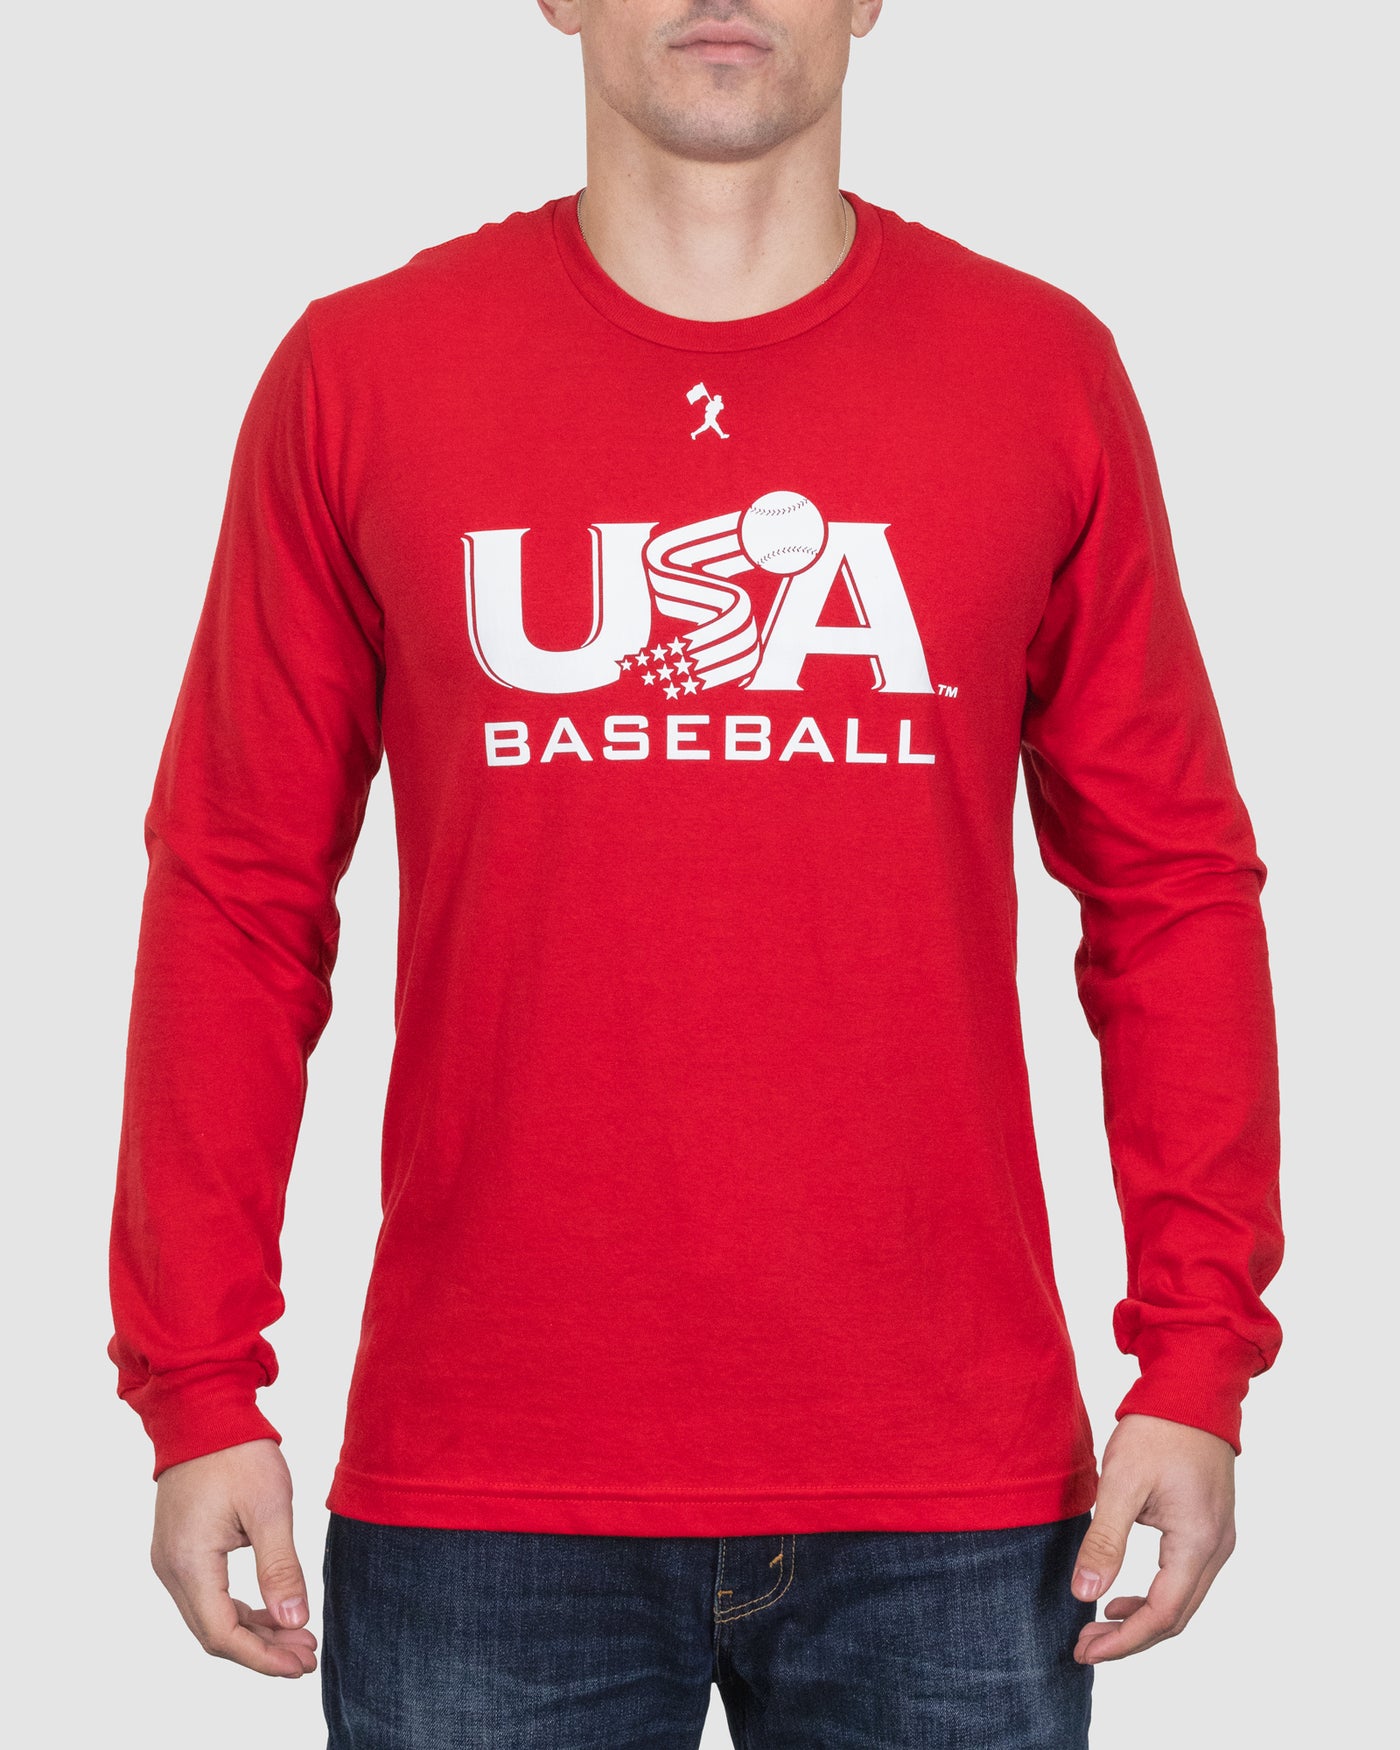 Baseballism x USA Baseball Long Sleeve - Red